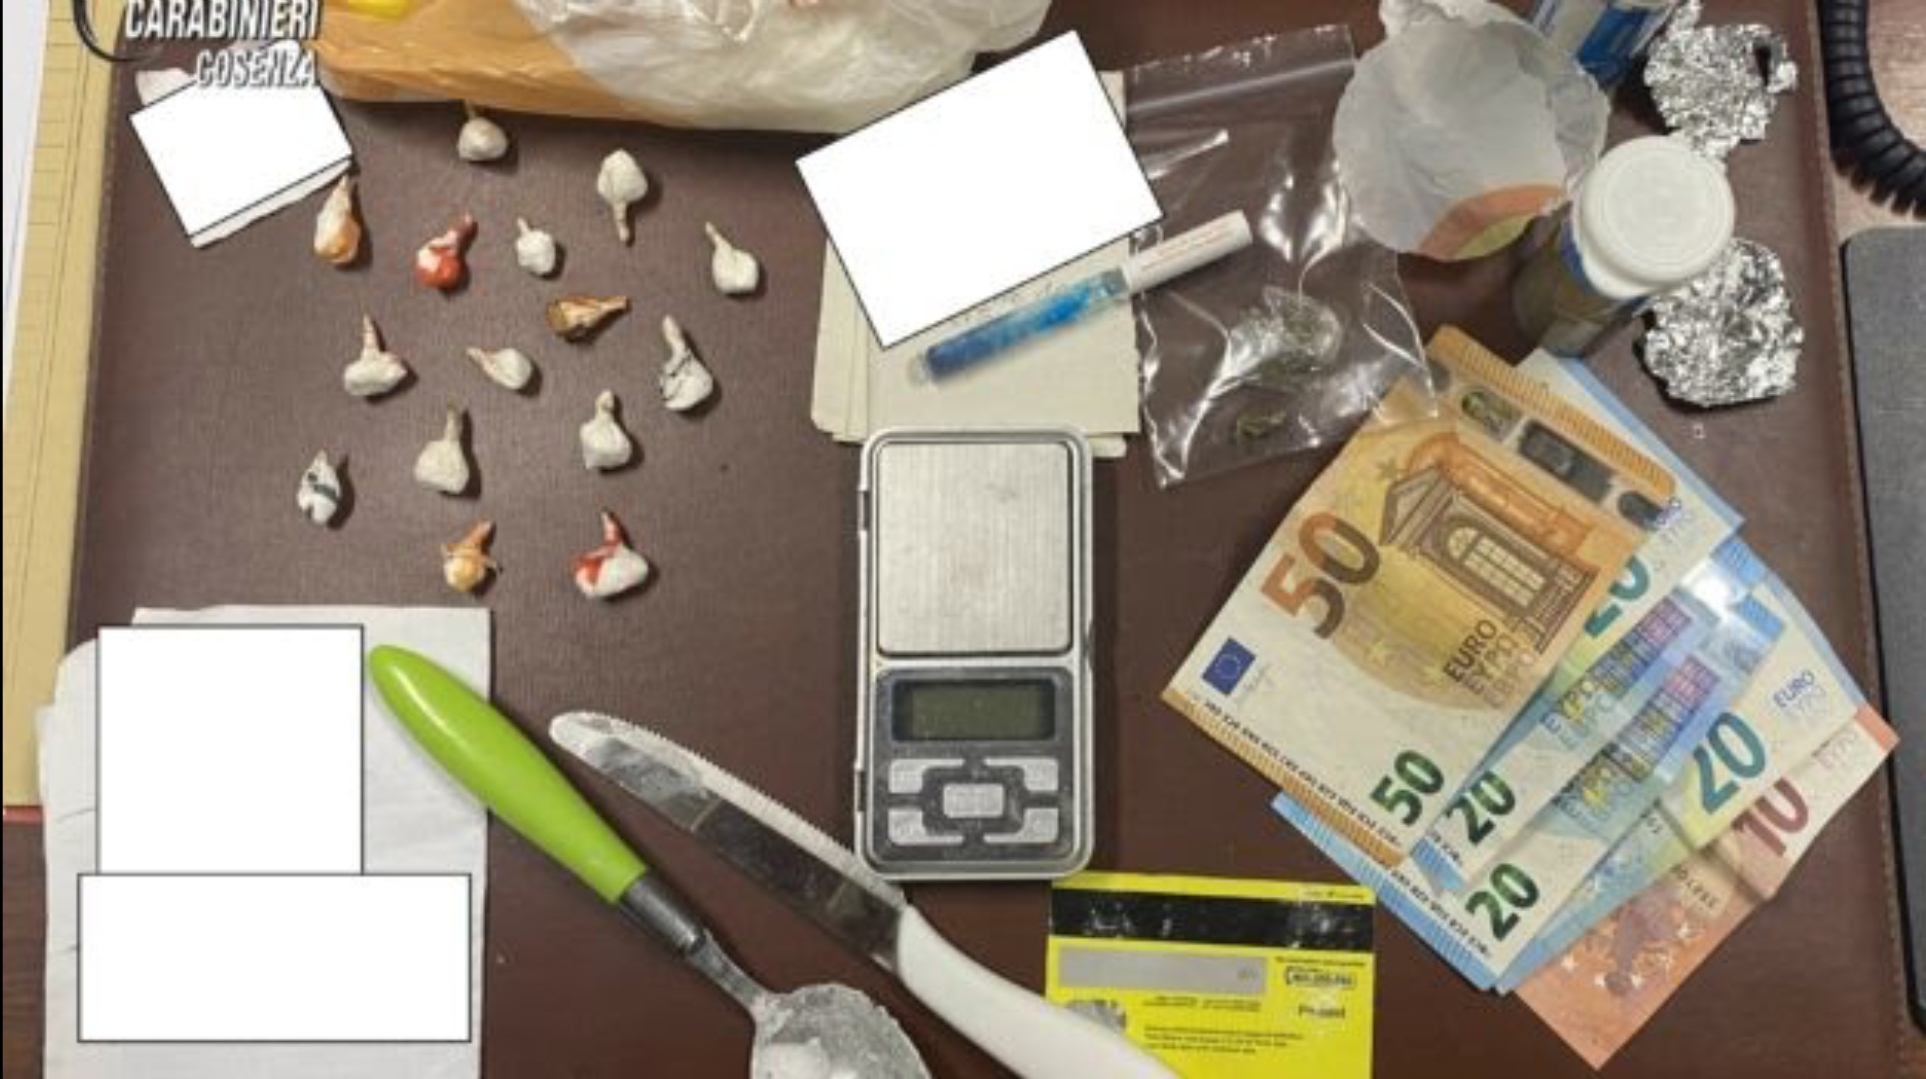 Droga a Casa: Arrestato 28enne - Cosenza - Calabria